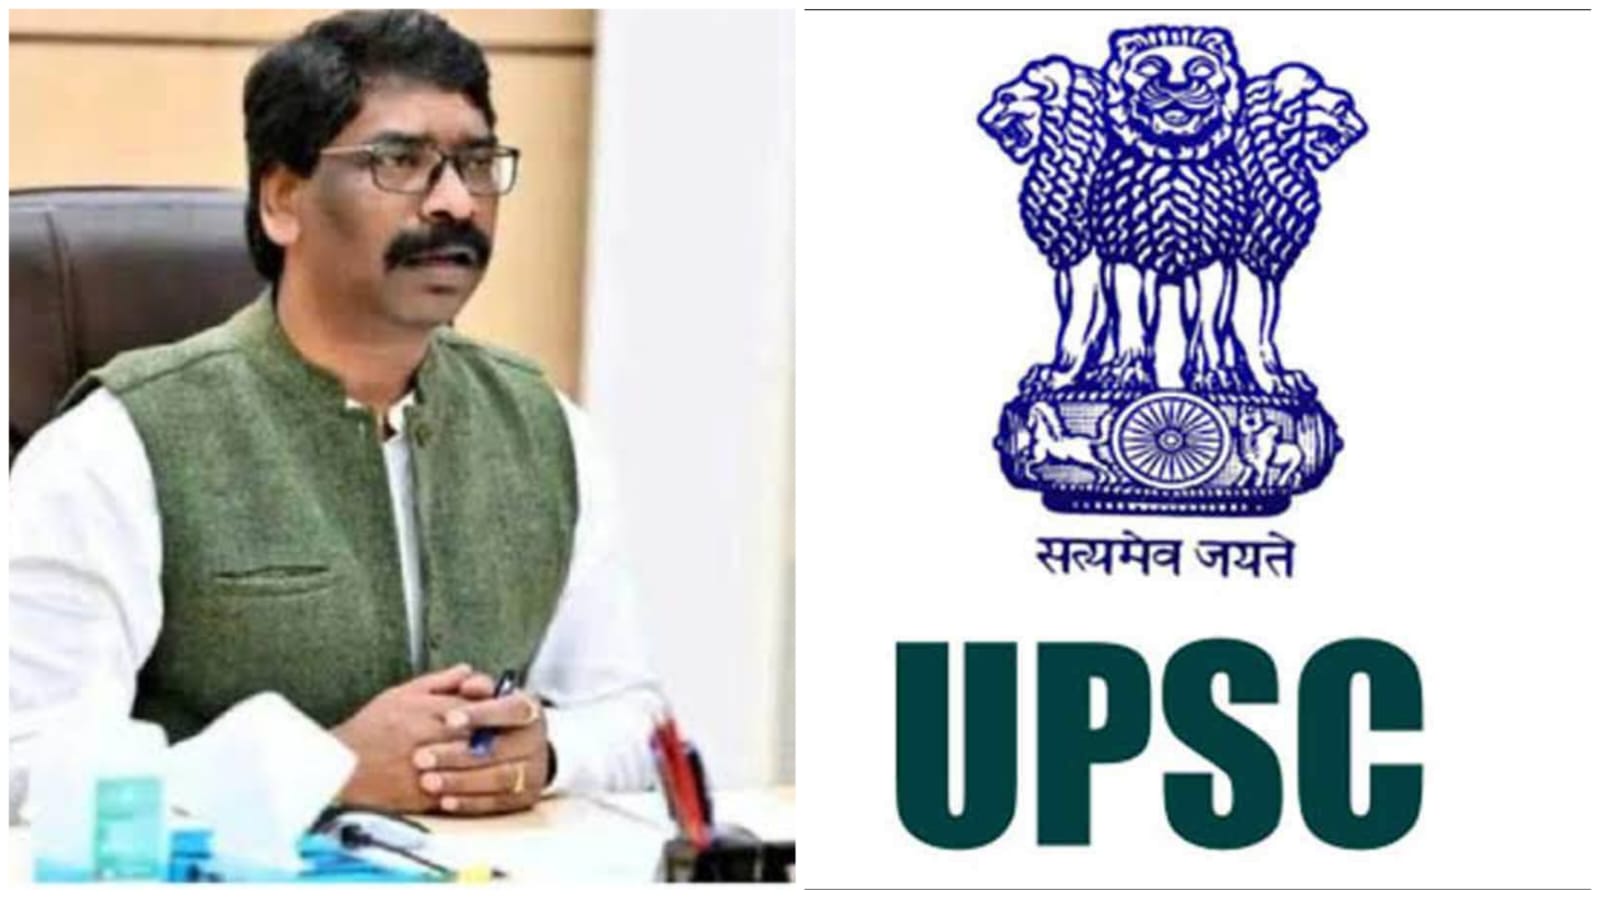 UPSC,UPSC Civil Services 2021: आवेदन के लिए सिर्फ दो दिन बाकी, देखें  परीक्षा व वैकेंसी डीटेल - upsc civil service exam 2021 prelims, ias ips  exam detail - Navbharat Times